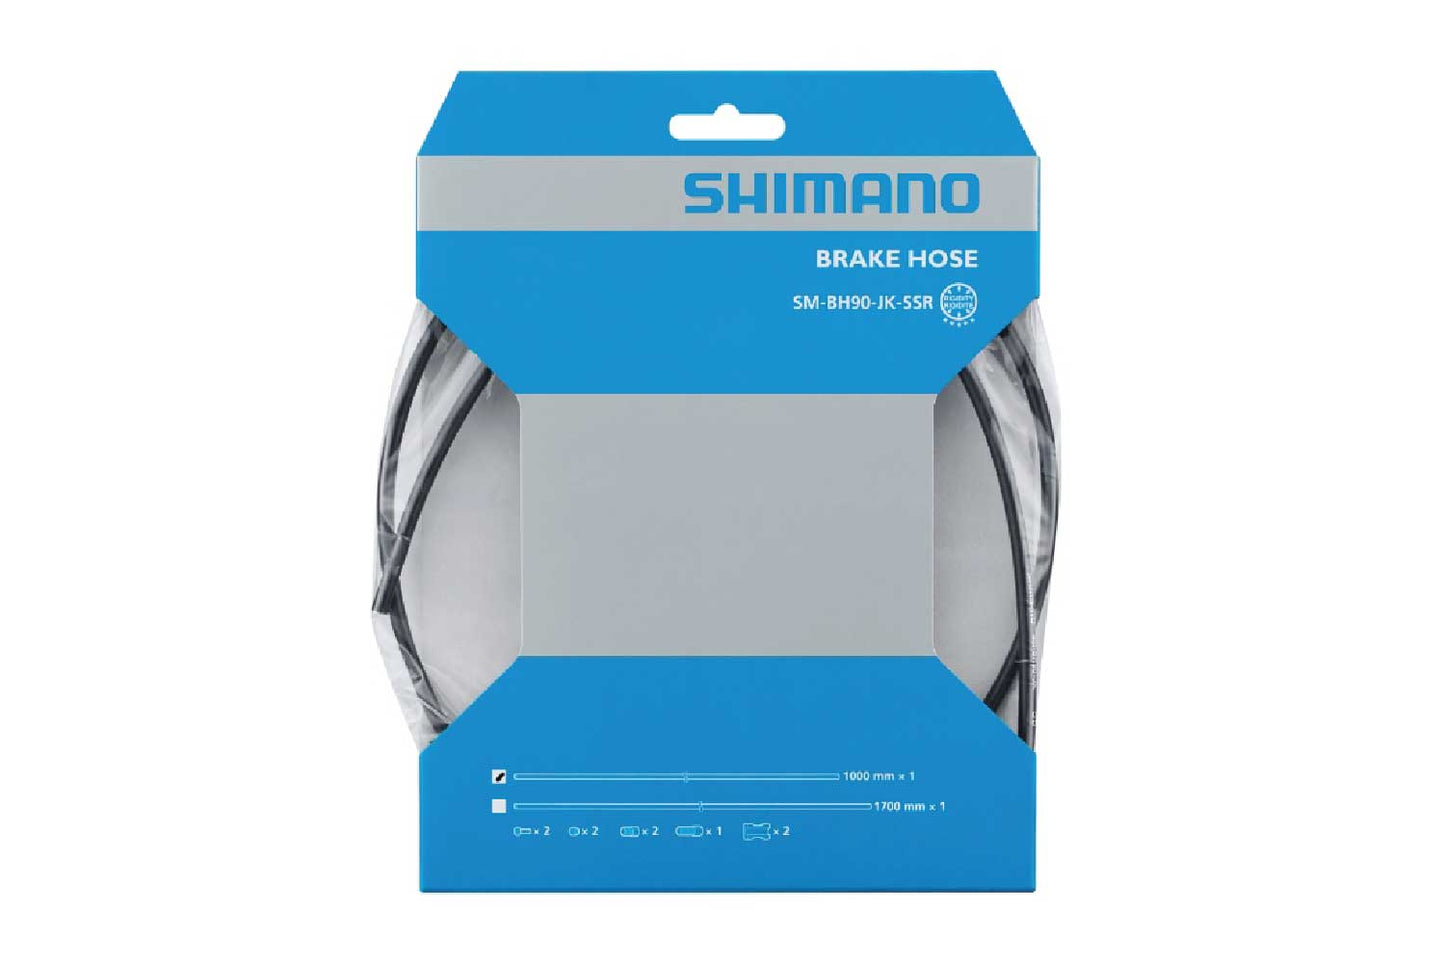 Shimano - SHIMANO Hydraulic Brake Hose - FISHTAIL CYCLERY